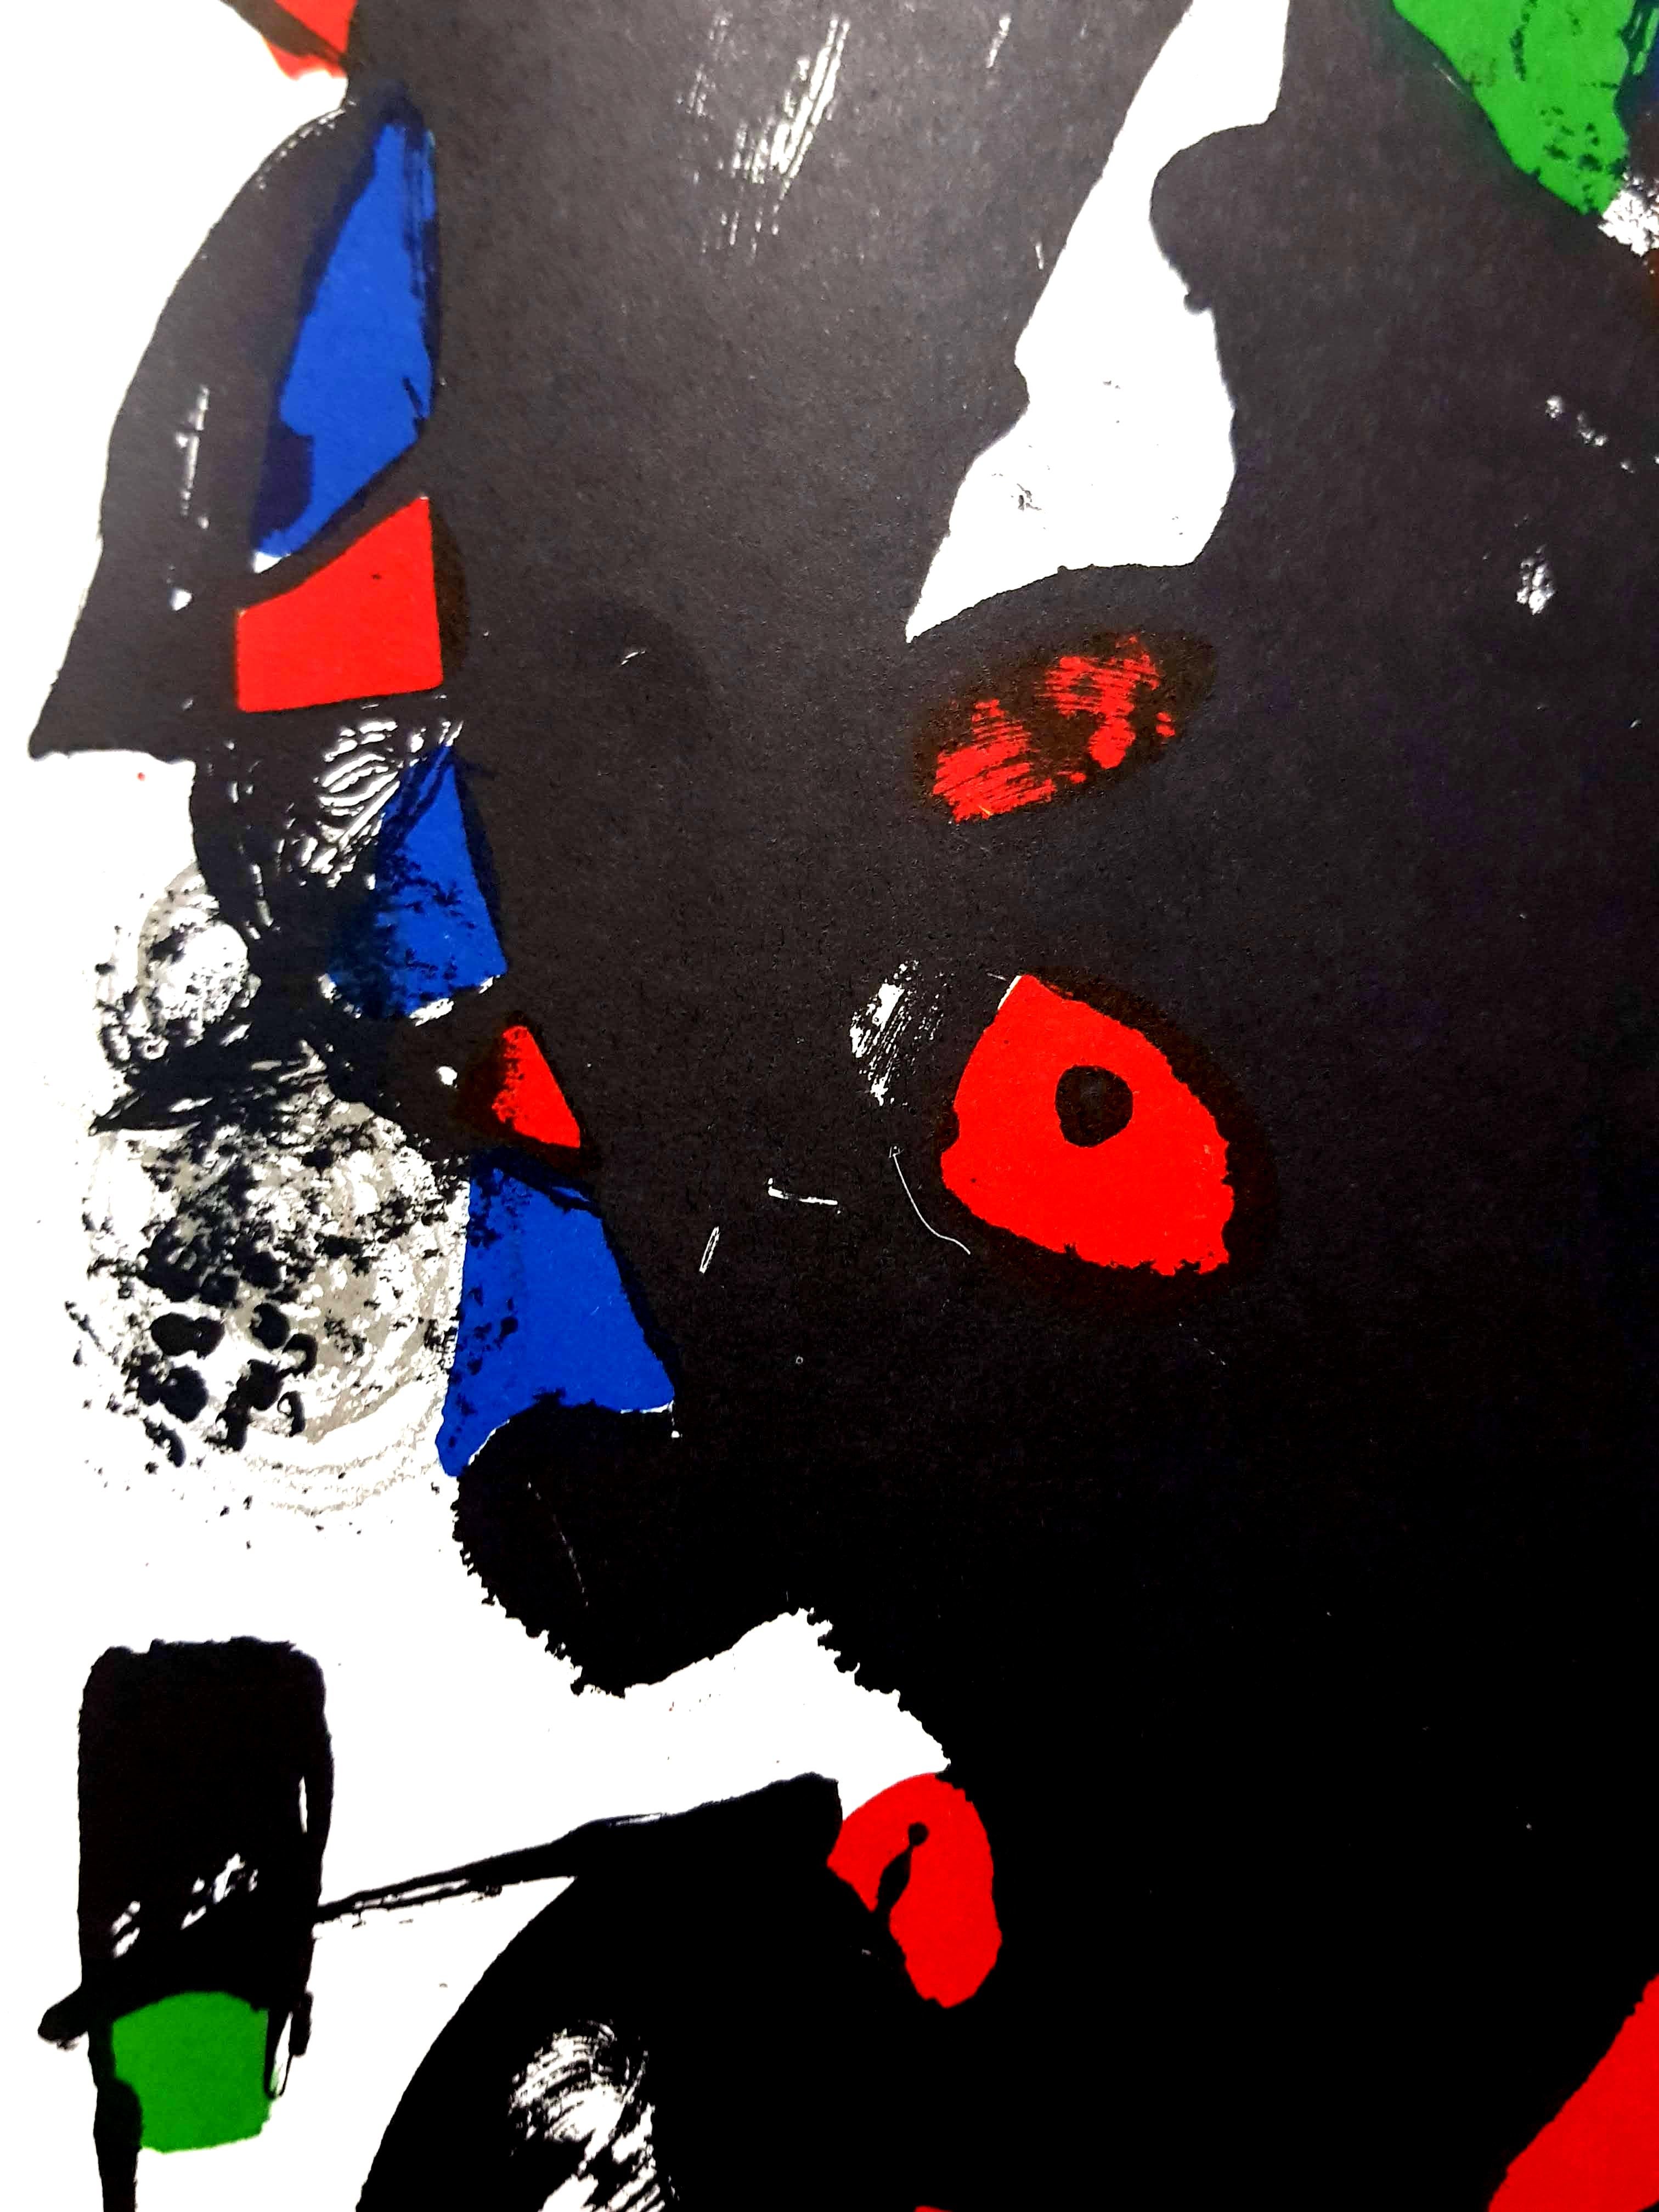 Joan Miro Miro Original Abstract Lithograph
Artist: Joan Miro
Medium: Original lithograph on Rives vellum
Portfolio: Miro Lithographe IV
Year: 1981
Edition: 150
Image Size: 10